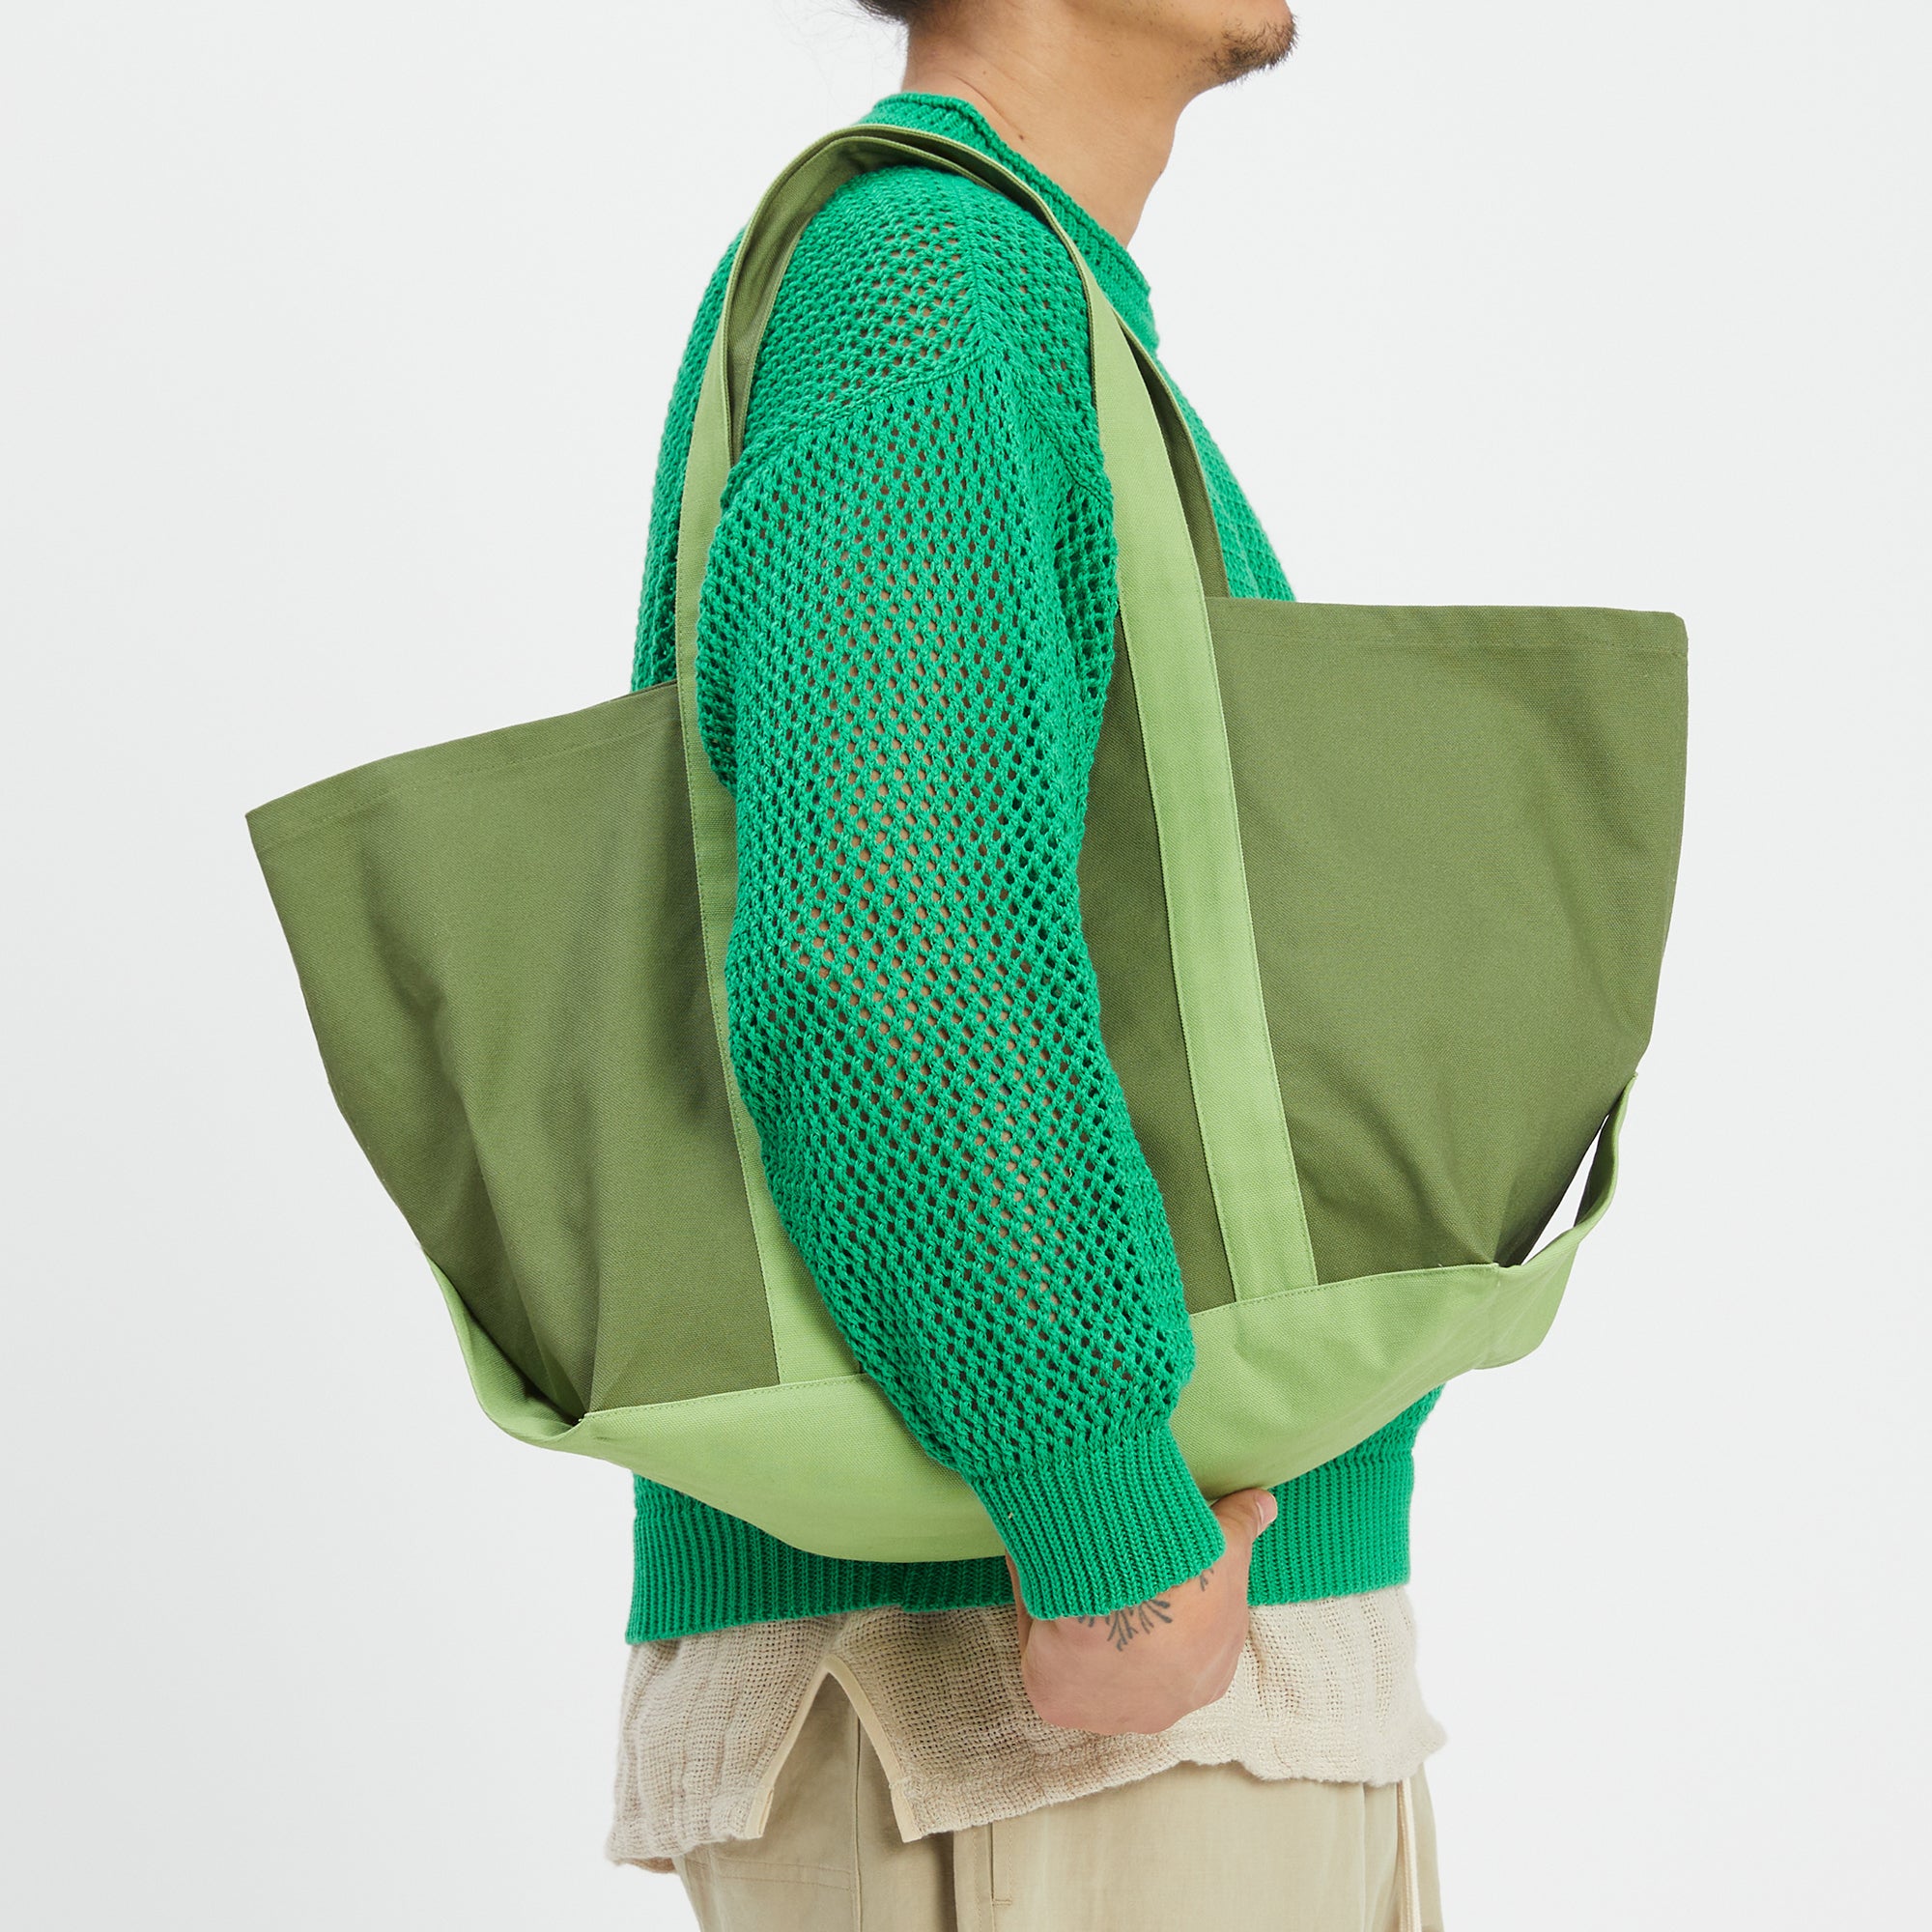 Chanel Natural Beige Logo Organic Cotton Canvas Square Tote Bag V&A Handmade New